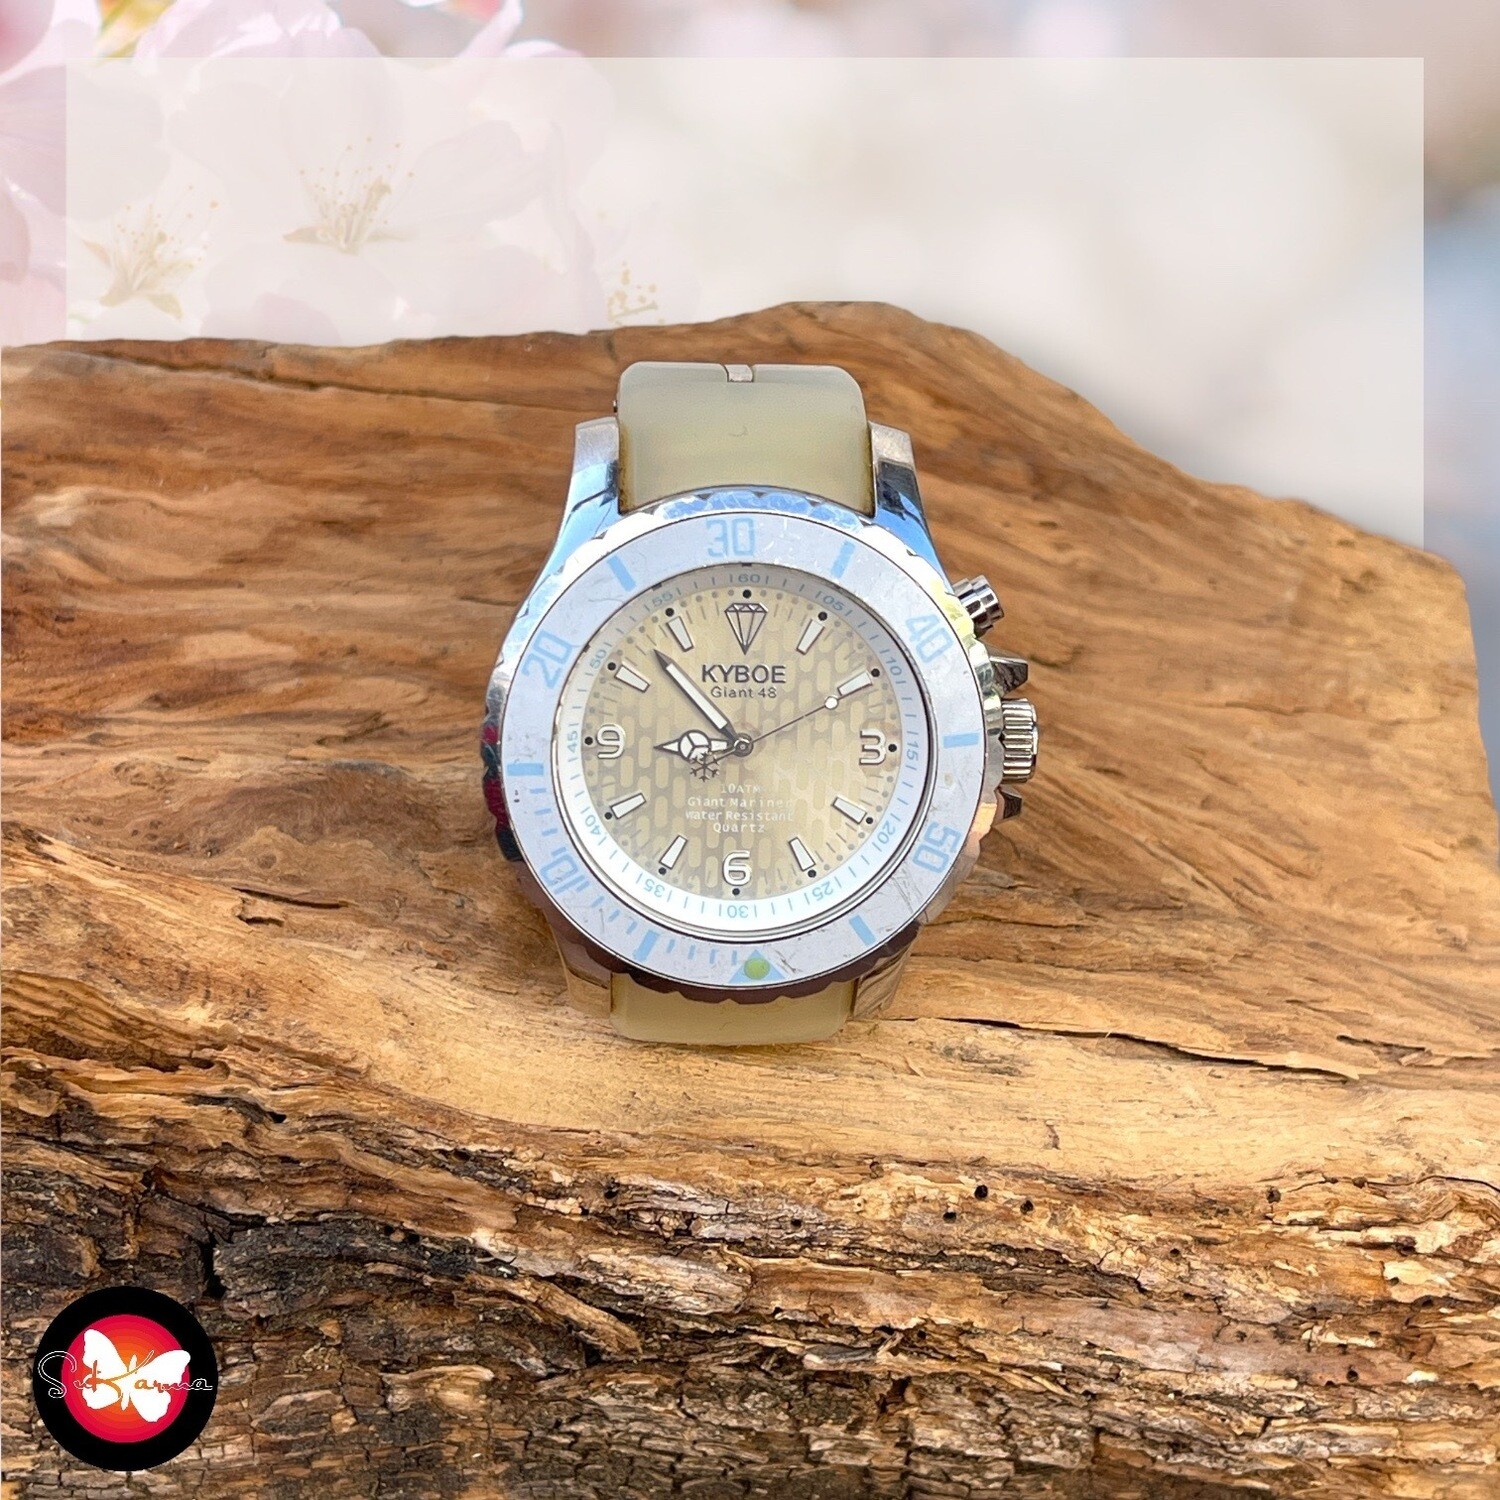 Reloj unisex Snow Crystal · KYBOE GIANT 48mm con correa de silicona